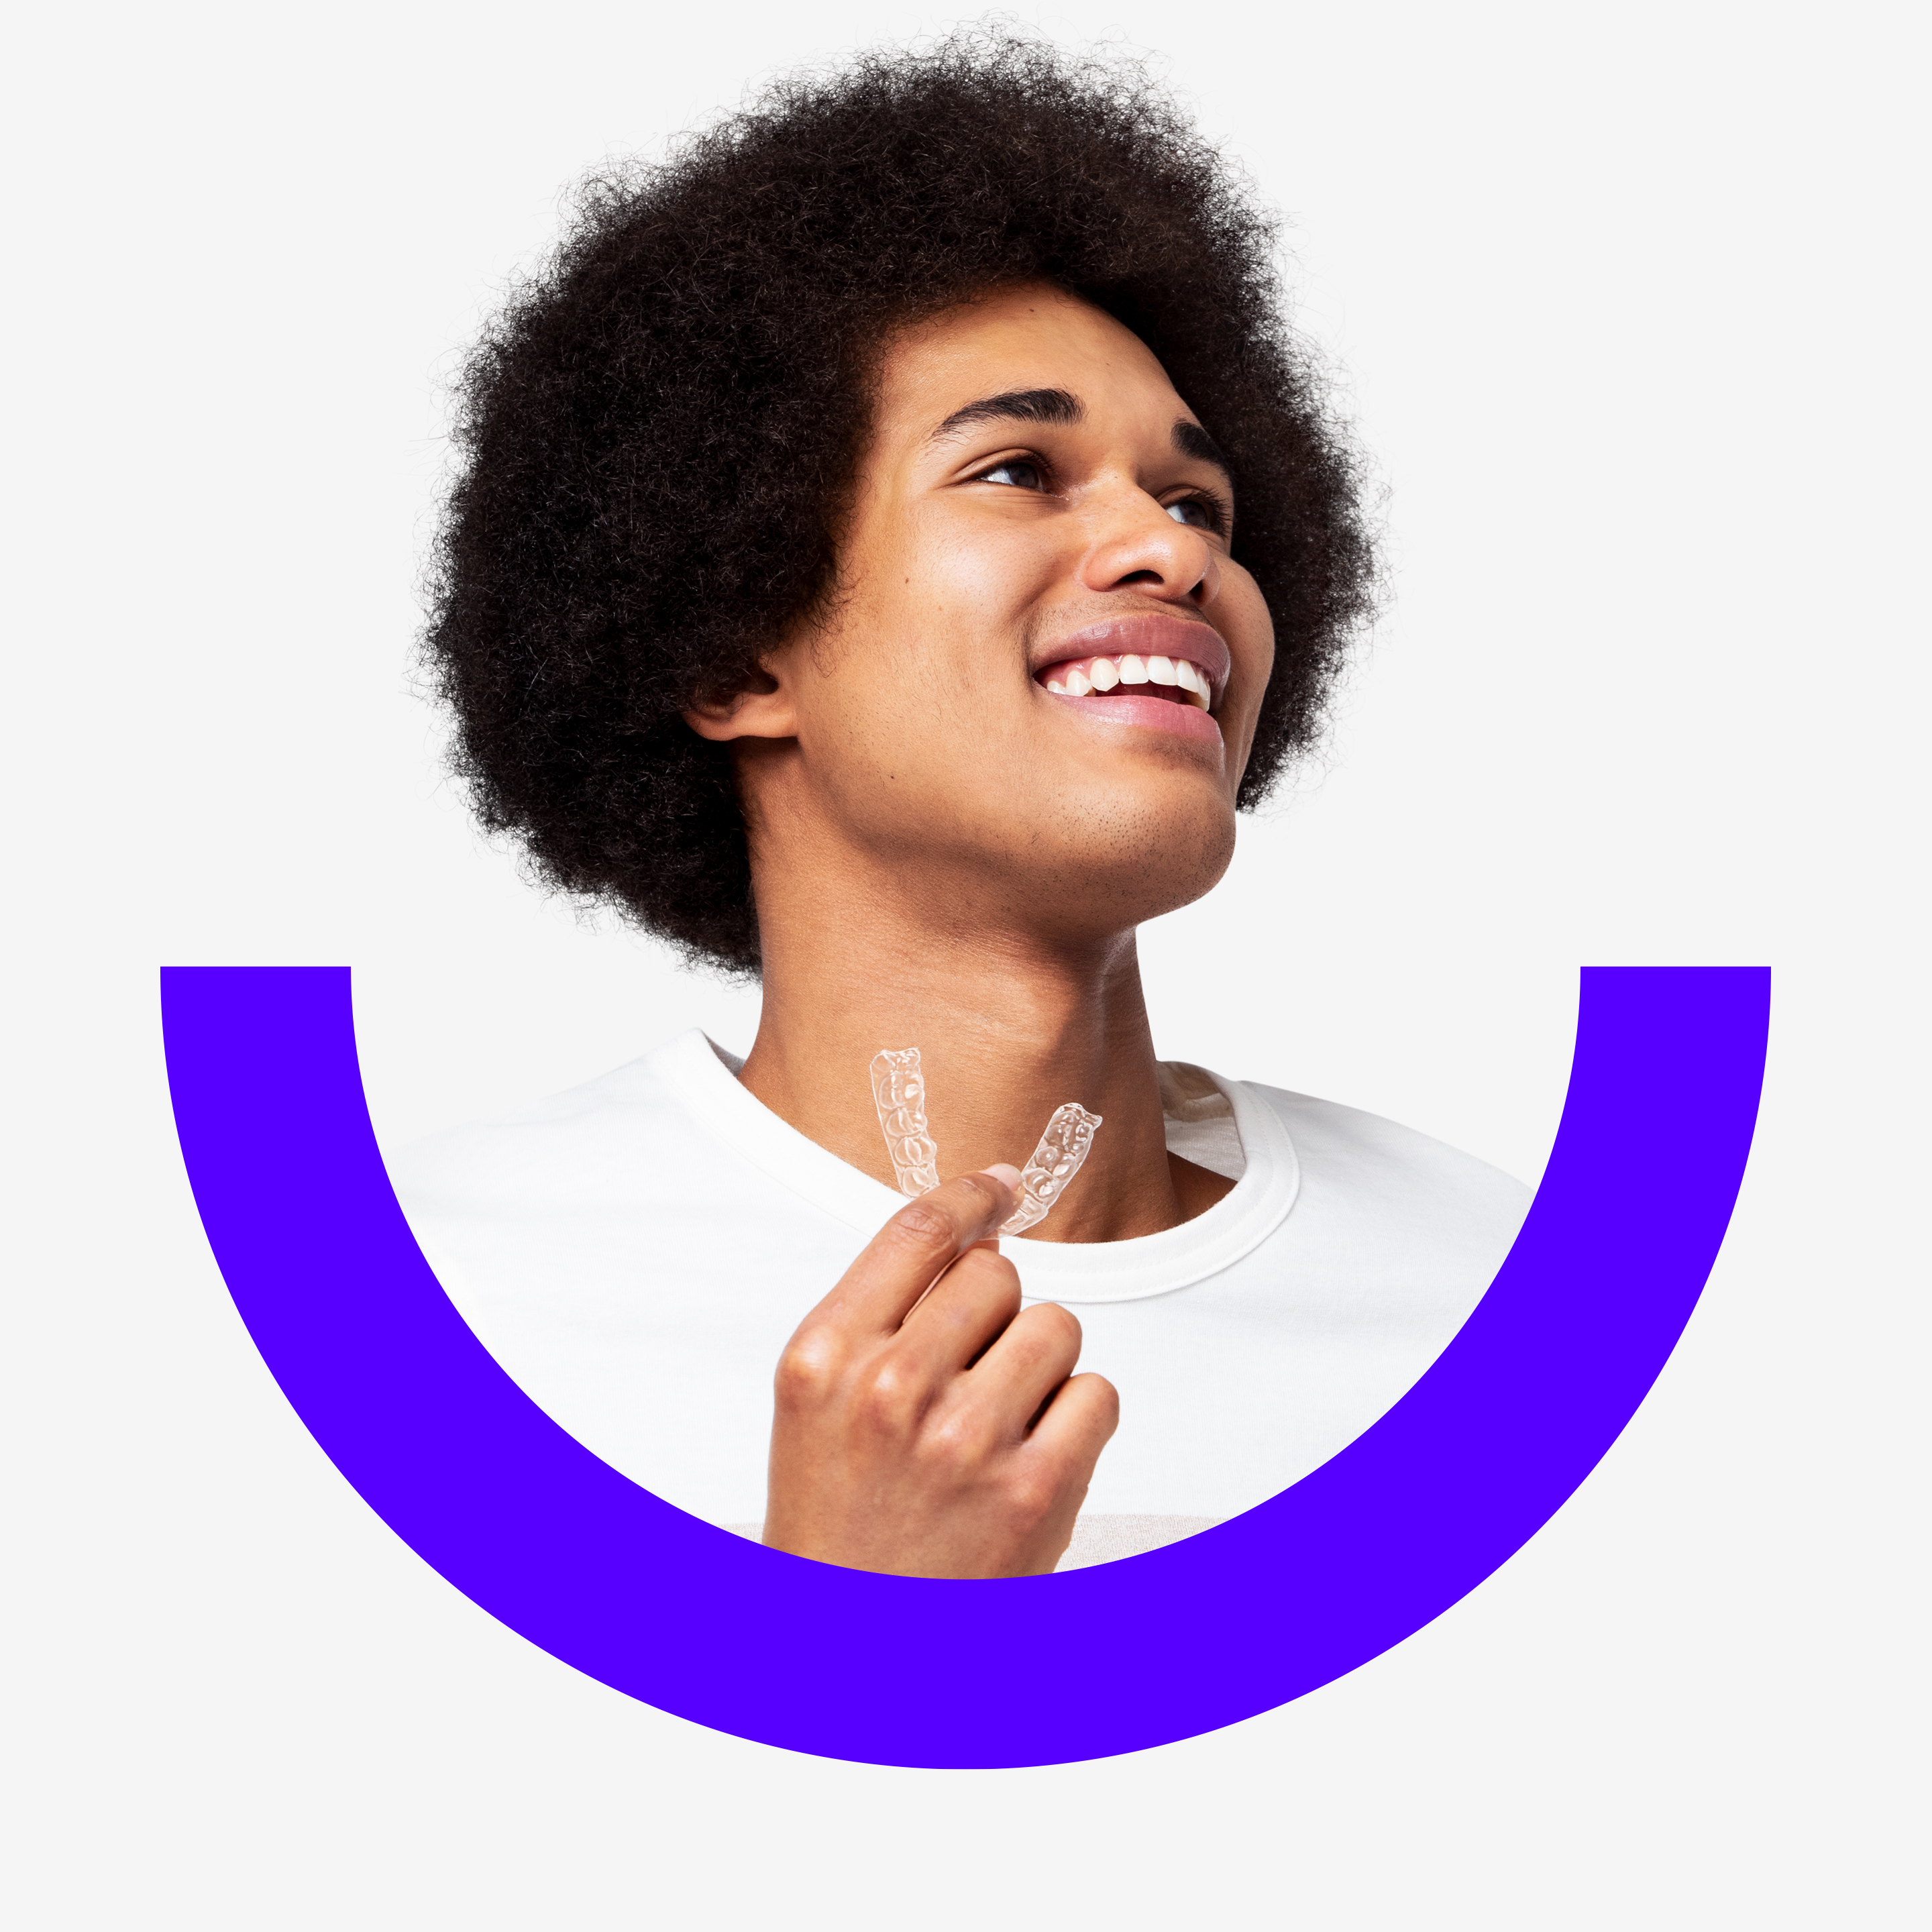 Smiling Black man holding SmileDirectClub aligner with blurple choose smile branding